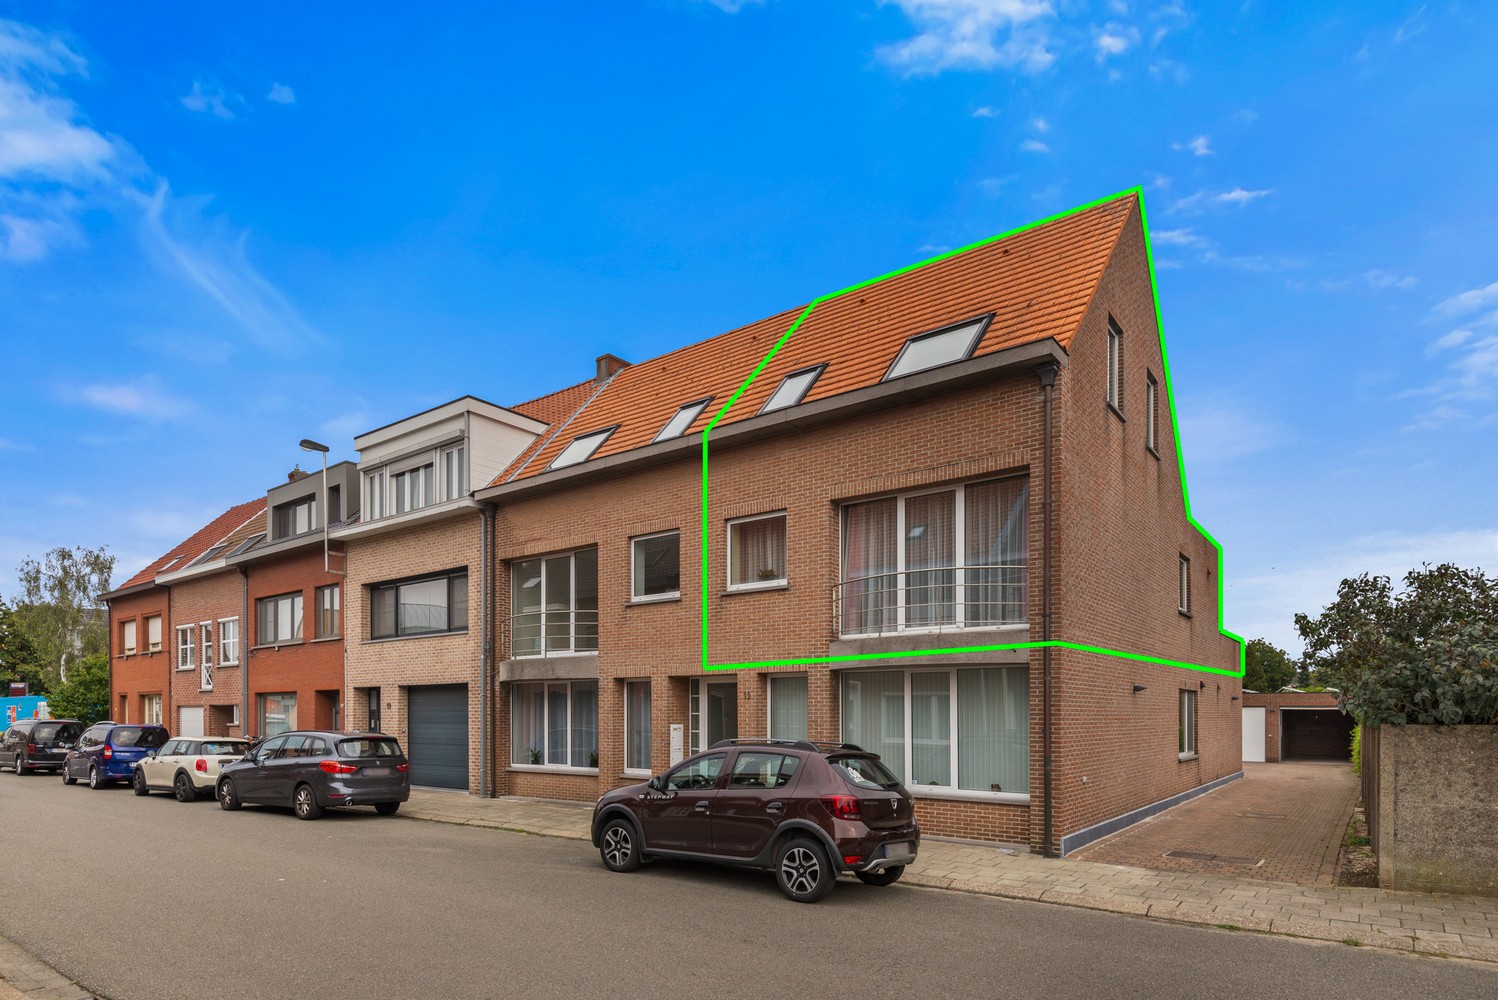 Leuke duplex met 2 slaapkamers, terras & garagebox in hartje Wommelgem! afbeelding 1